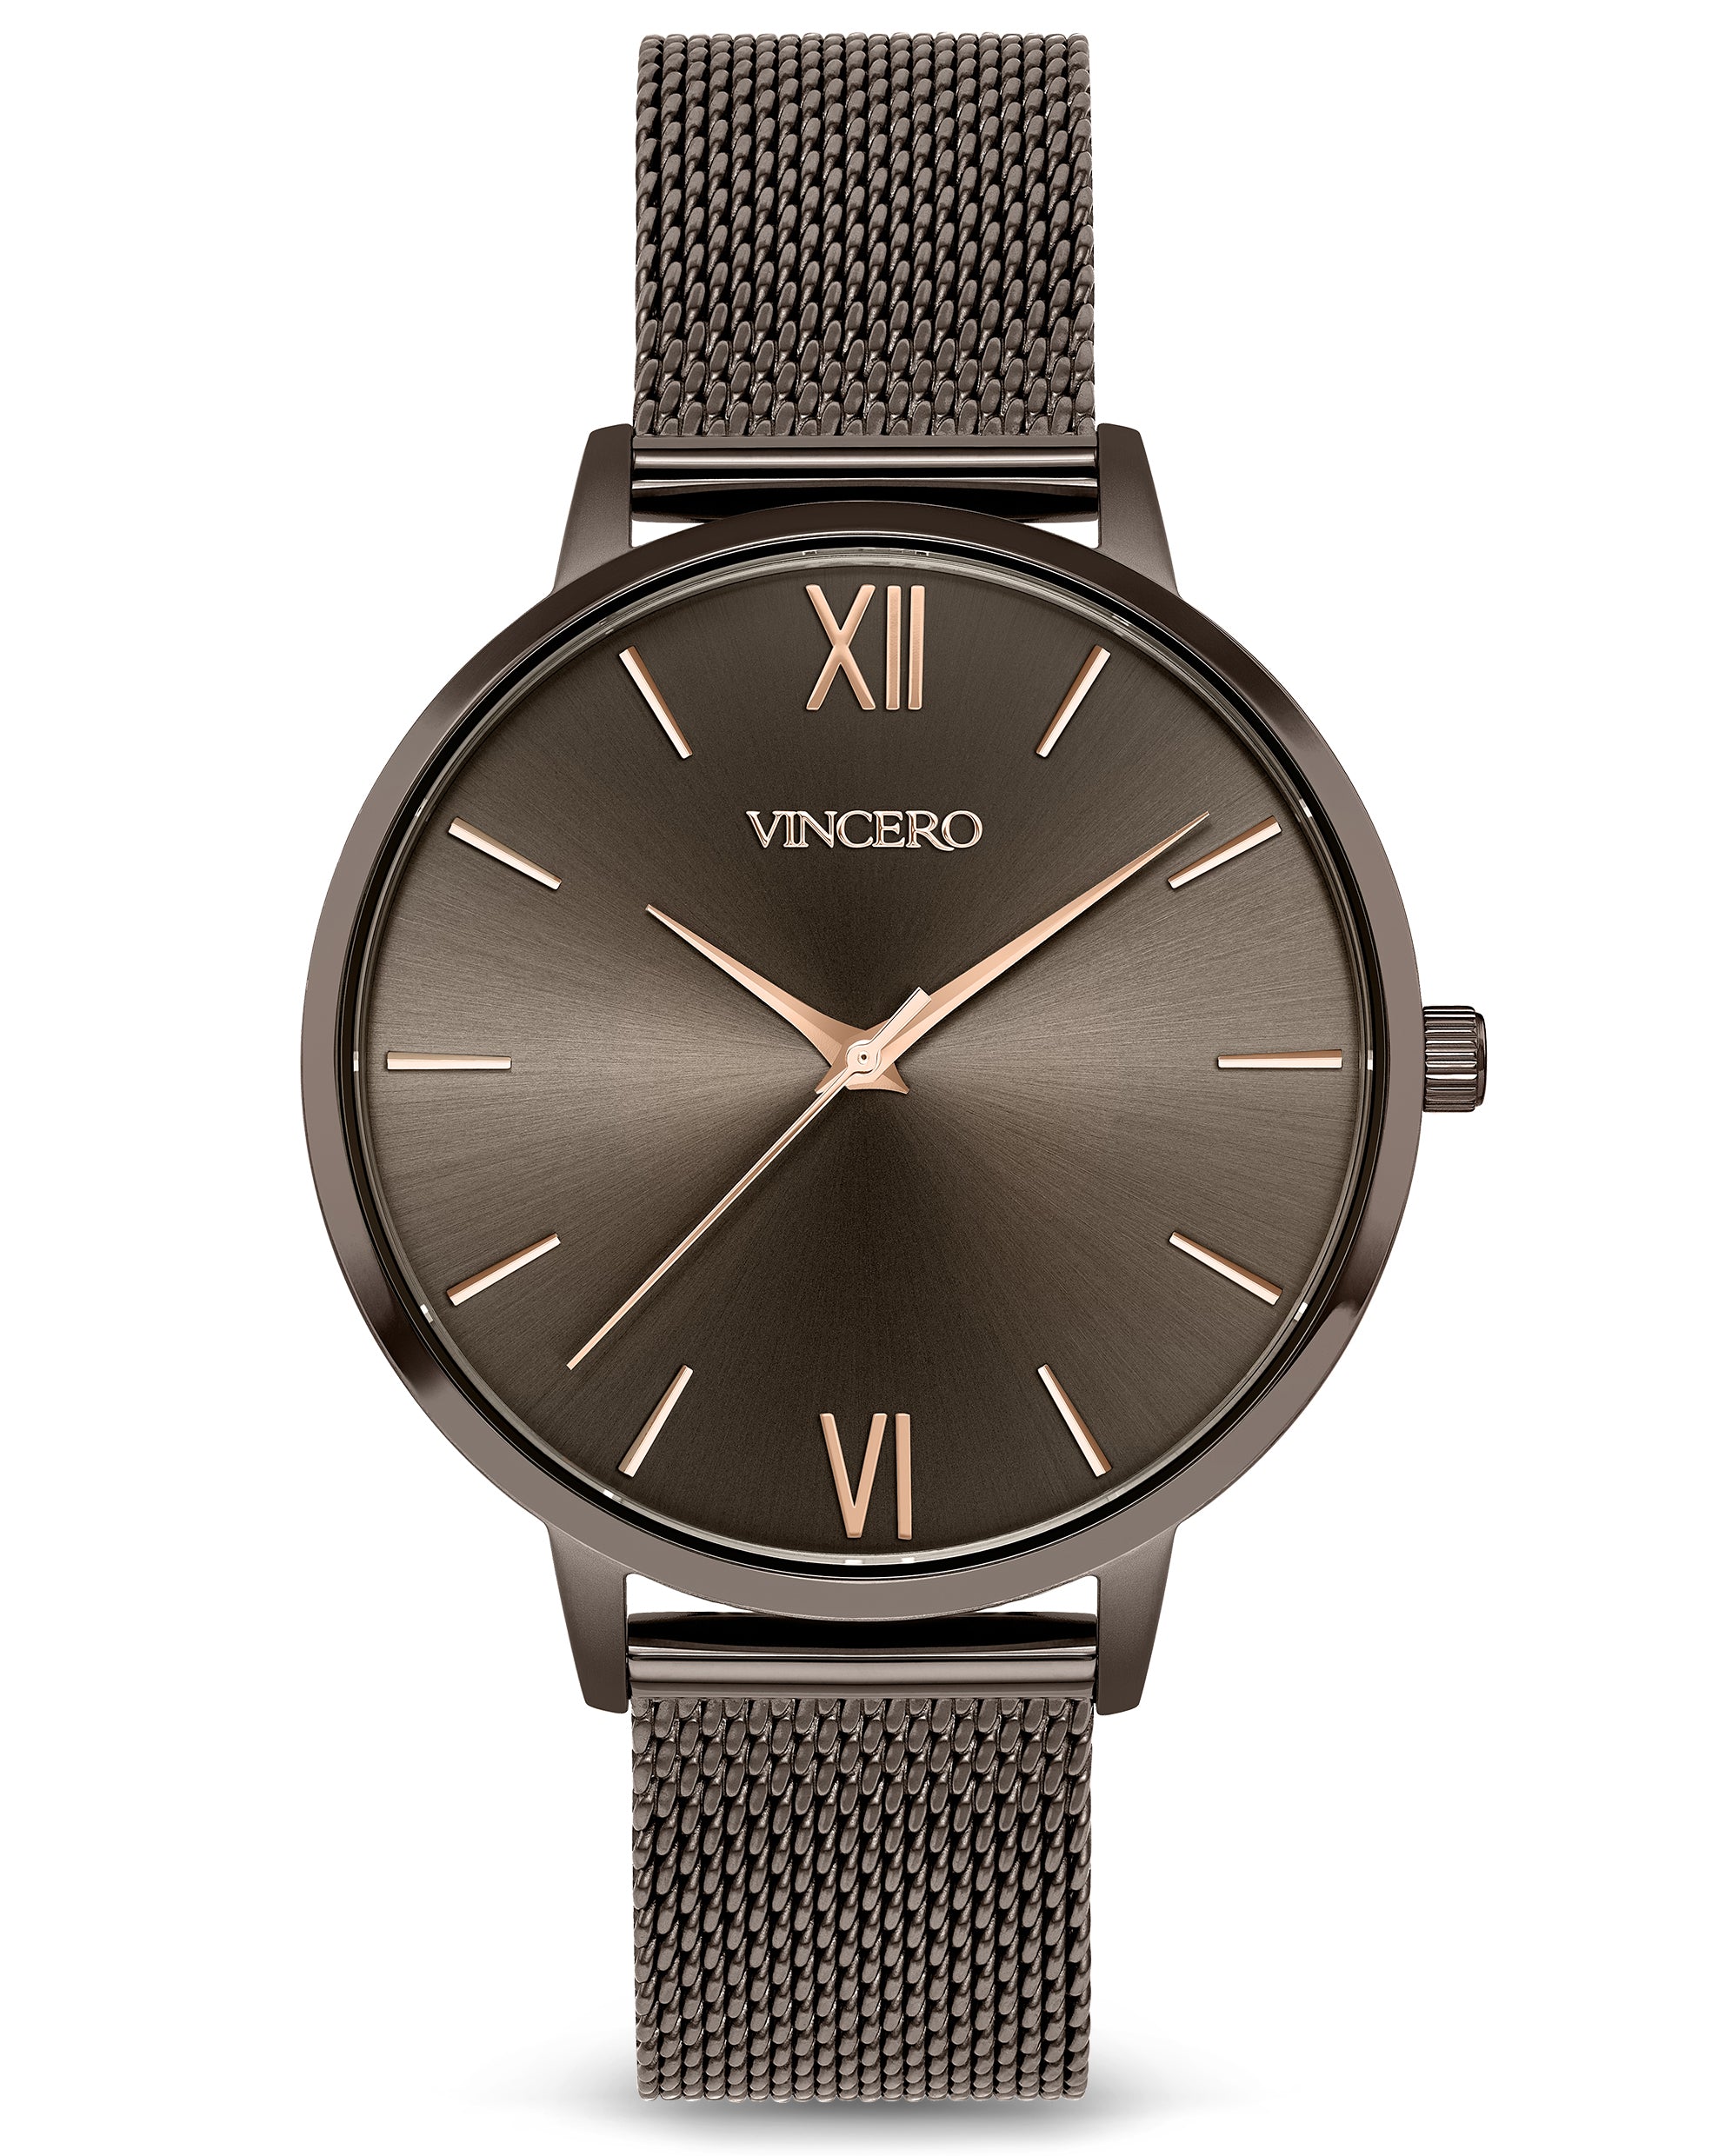 Oversized Women's Watches, Vincero Watches